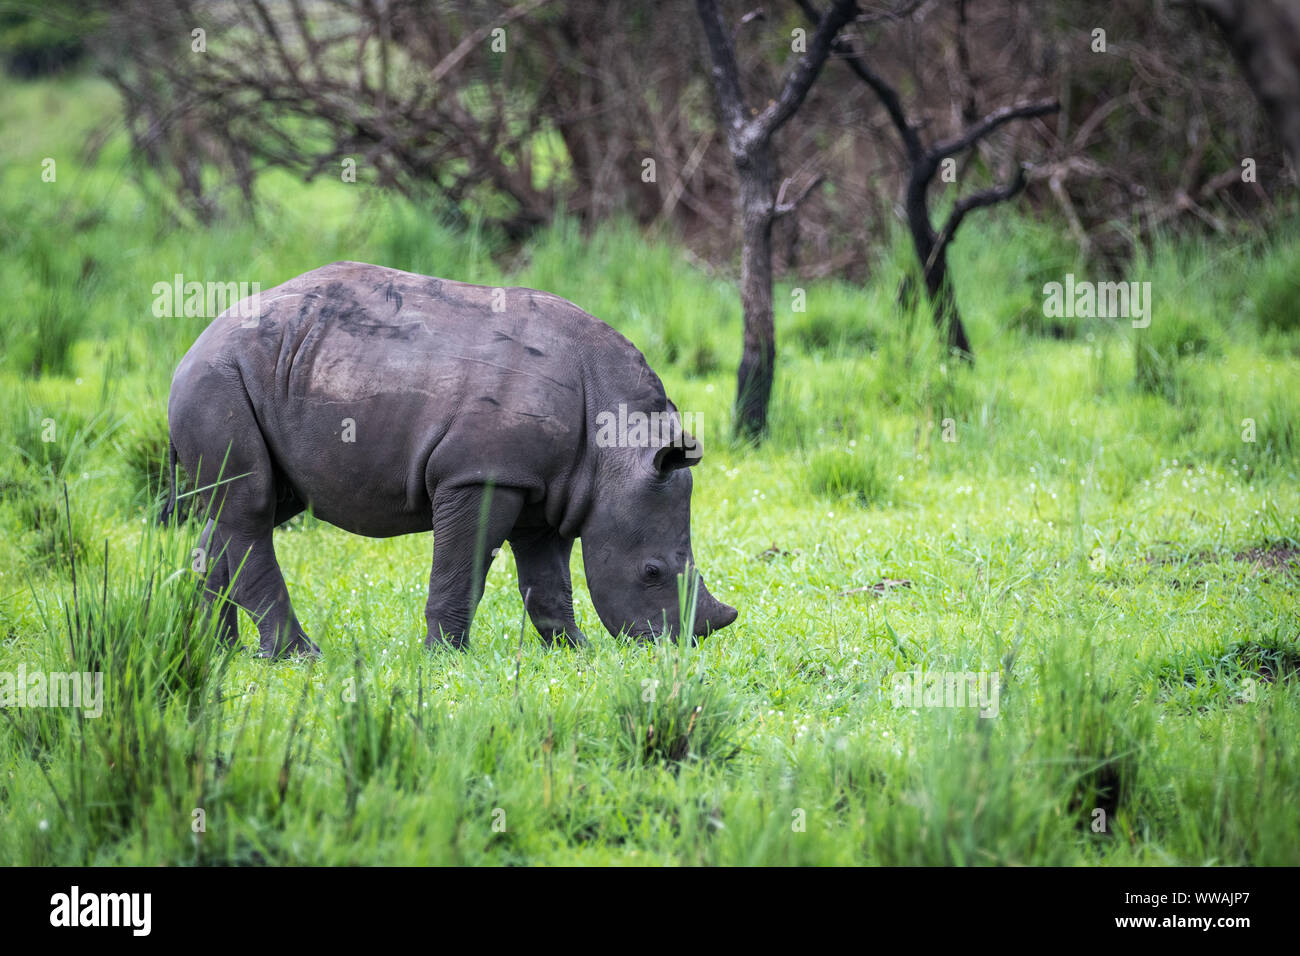 Southern white rhinoceros (Ceratotherium simum simum) calf seen during safari in Ziwa Rhino Sanctuary, Uganda Stock Photo